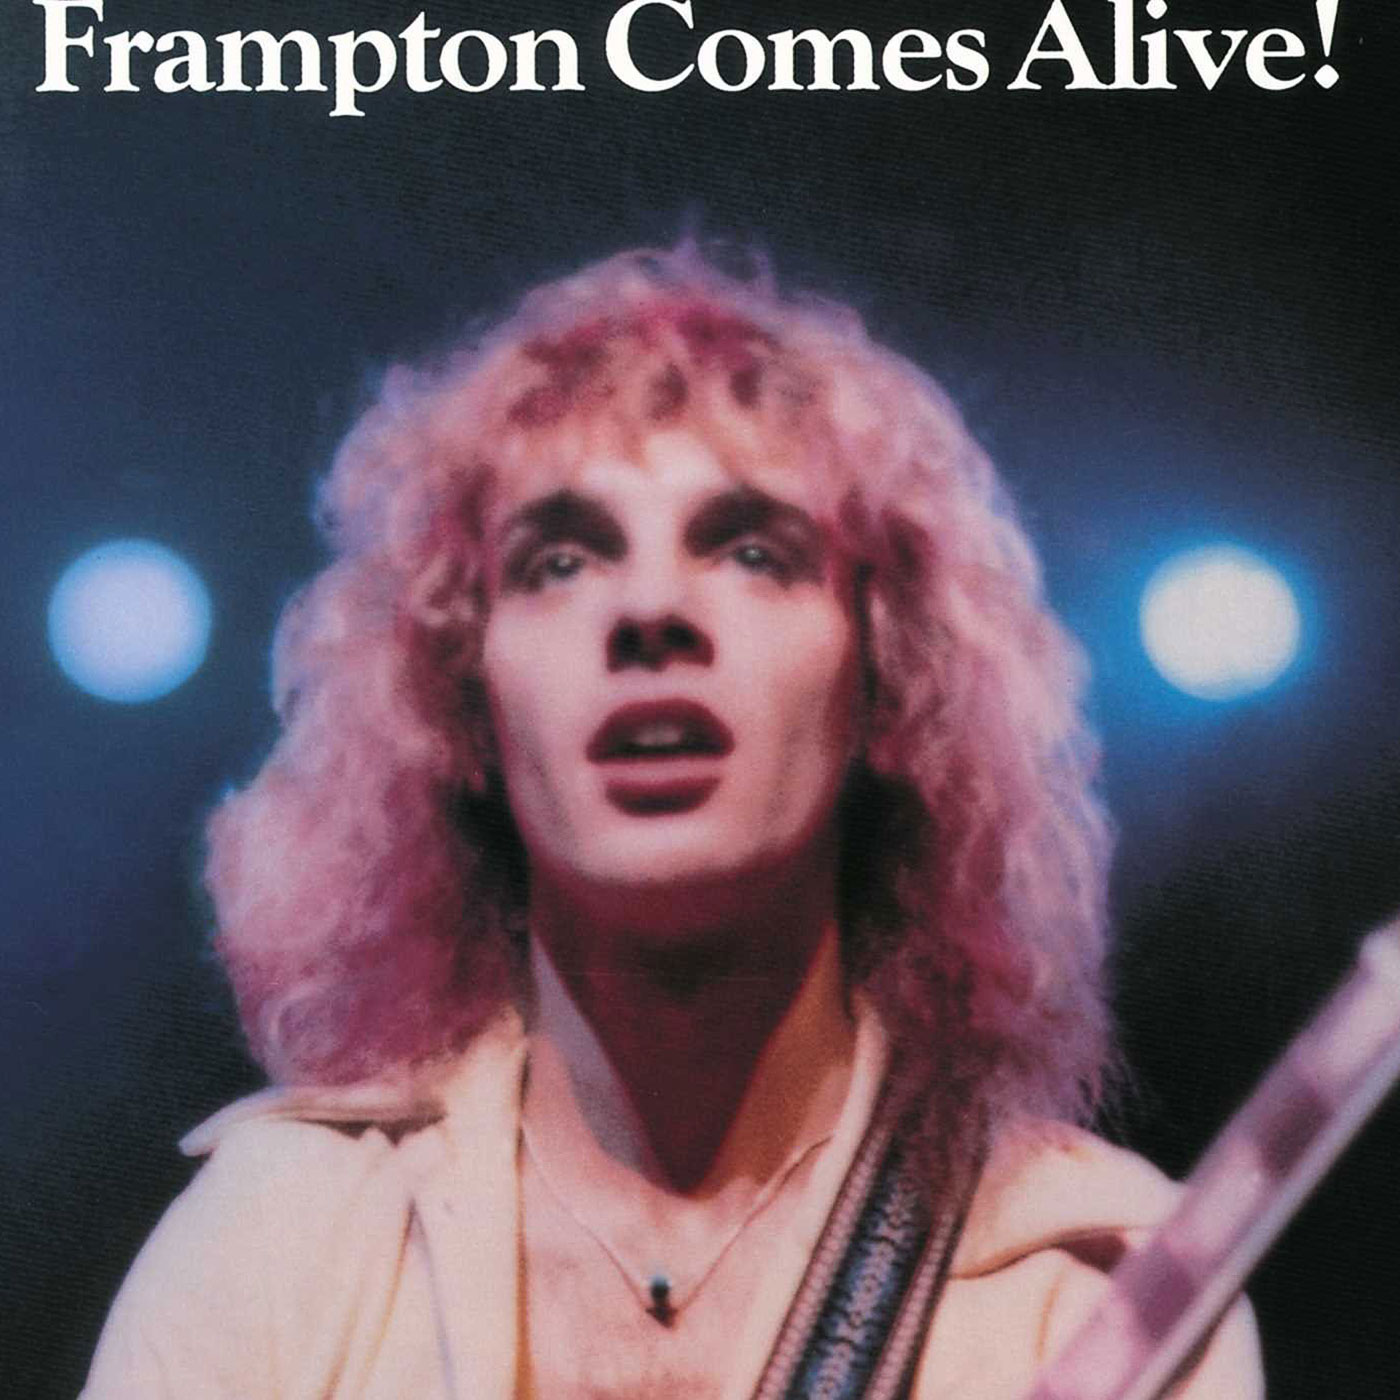 368 Peter Frampton – Frampton Comes Alive!